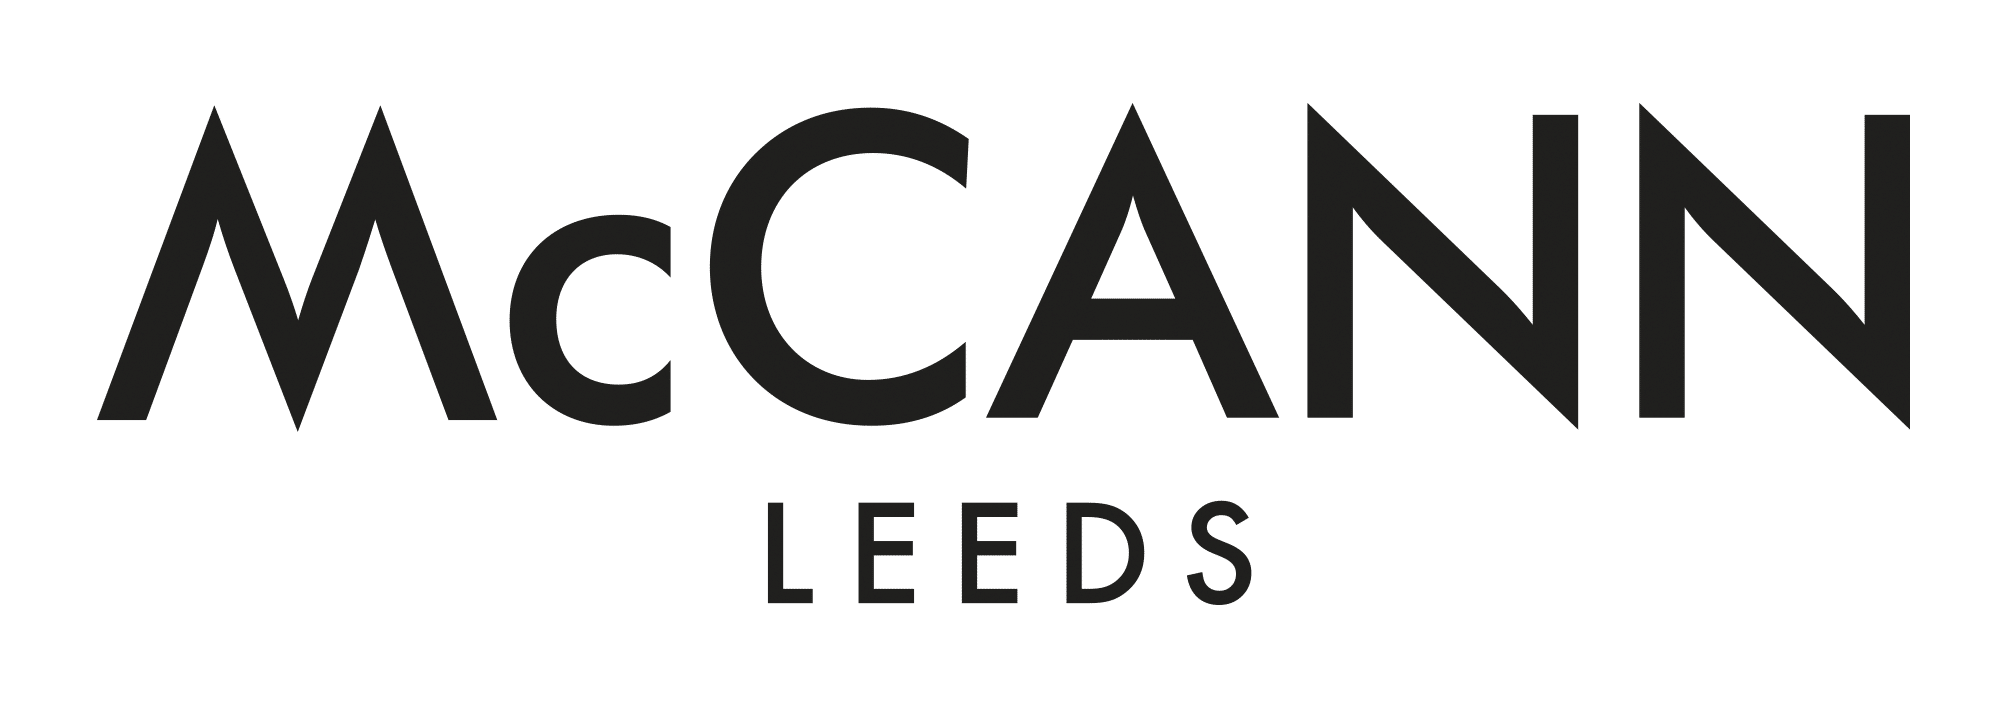 mccann_leeds_logo